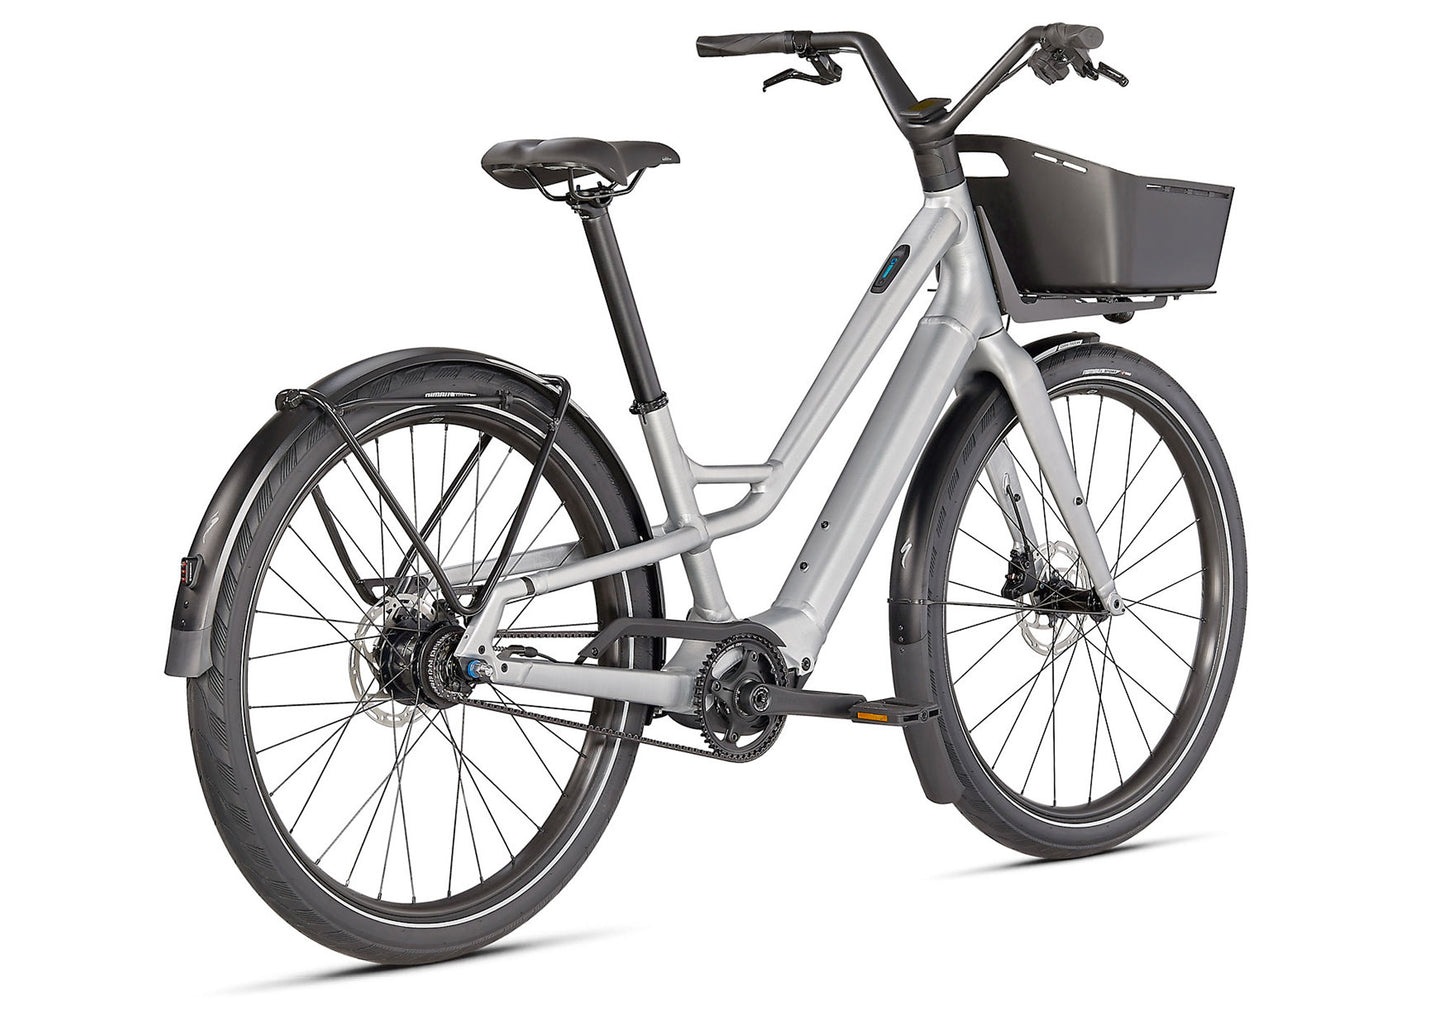 Specialized Turbo Como SL 5.0 Unisex Electric Urban Bike - Brushed Silver